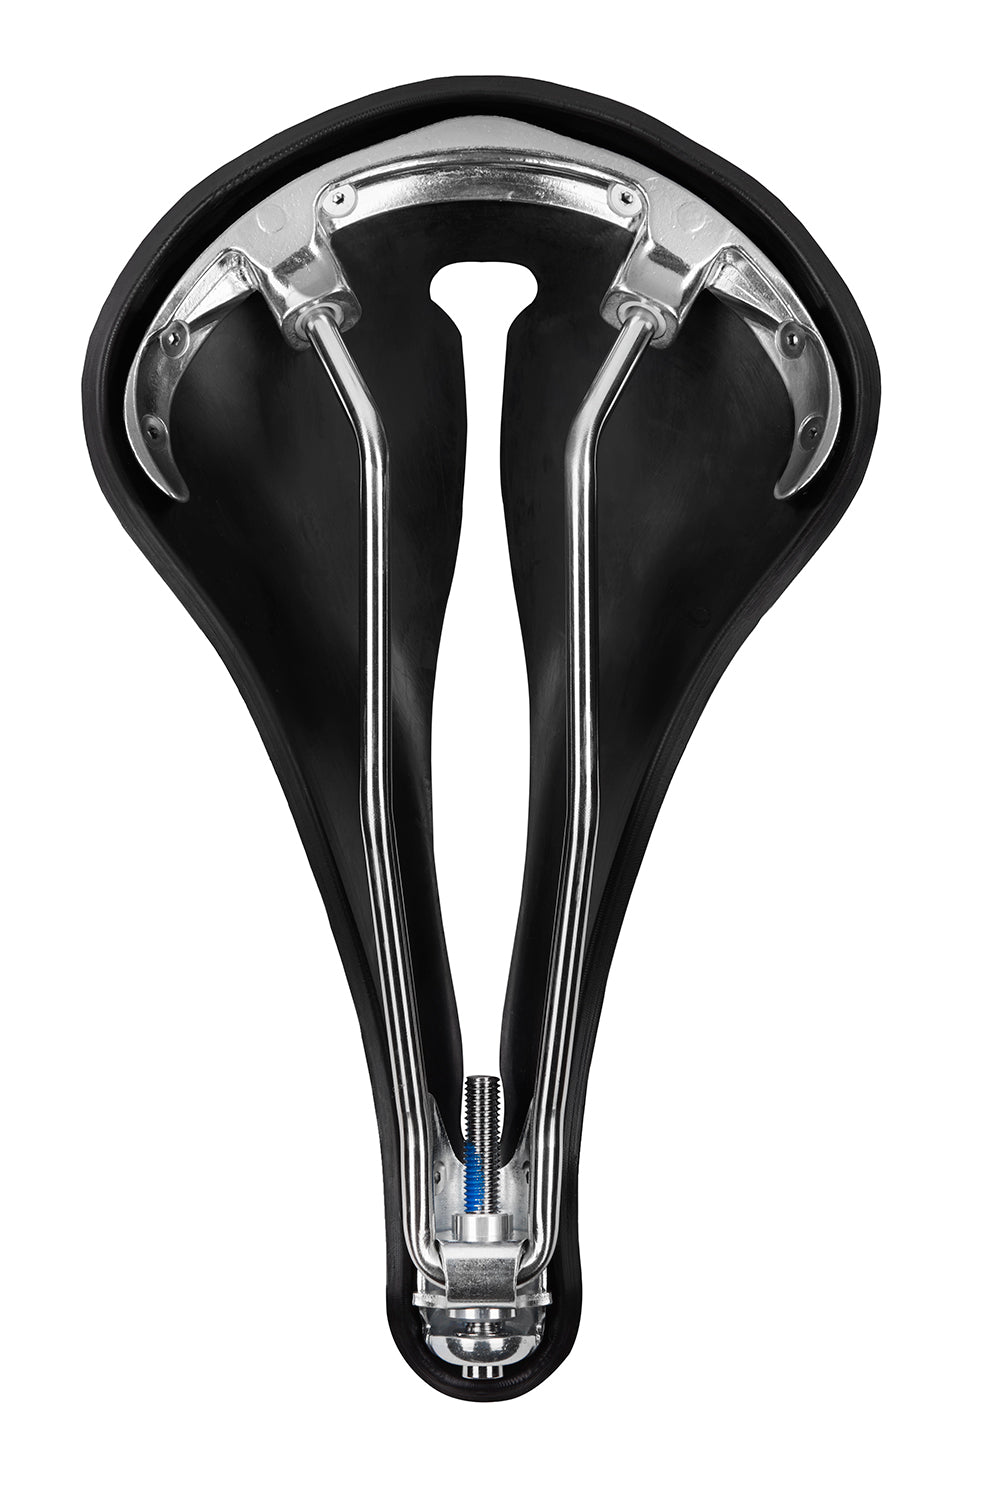 Selle Anatomica Series R2 Saddle | Rubber Bike Saddle